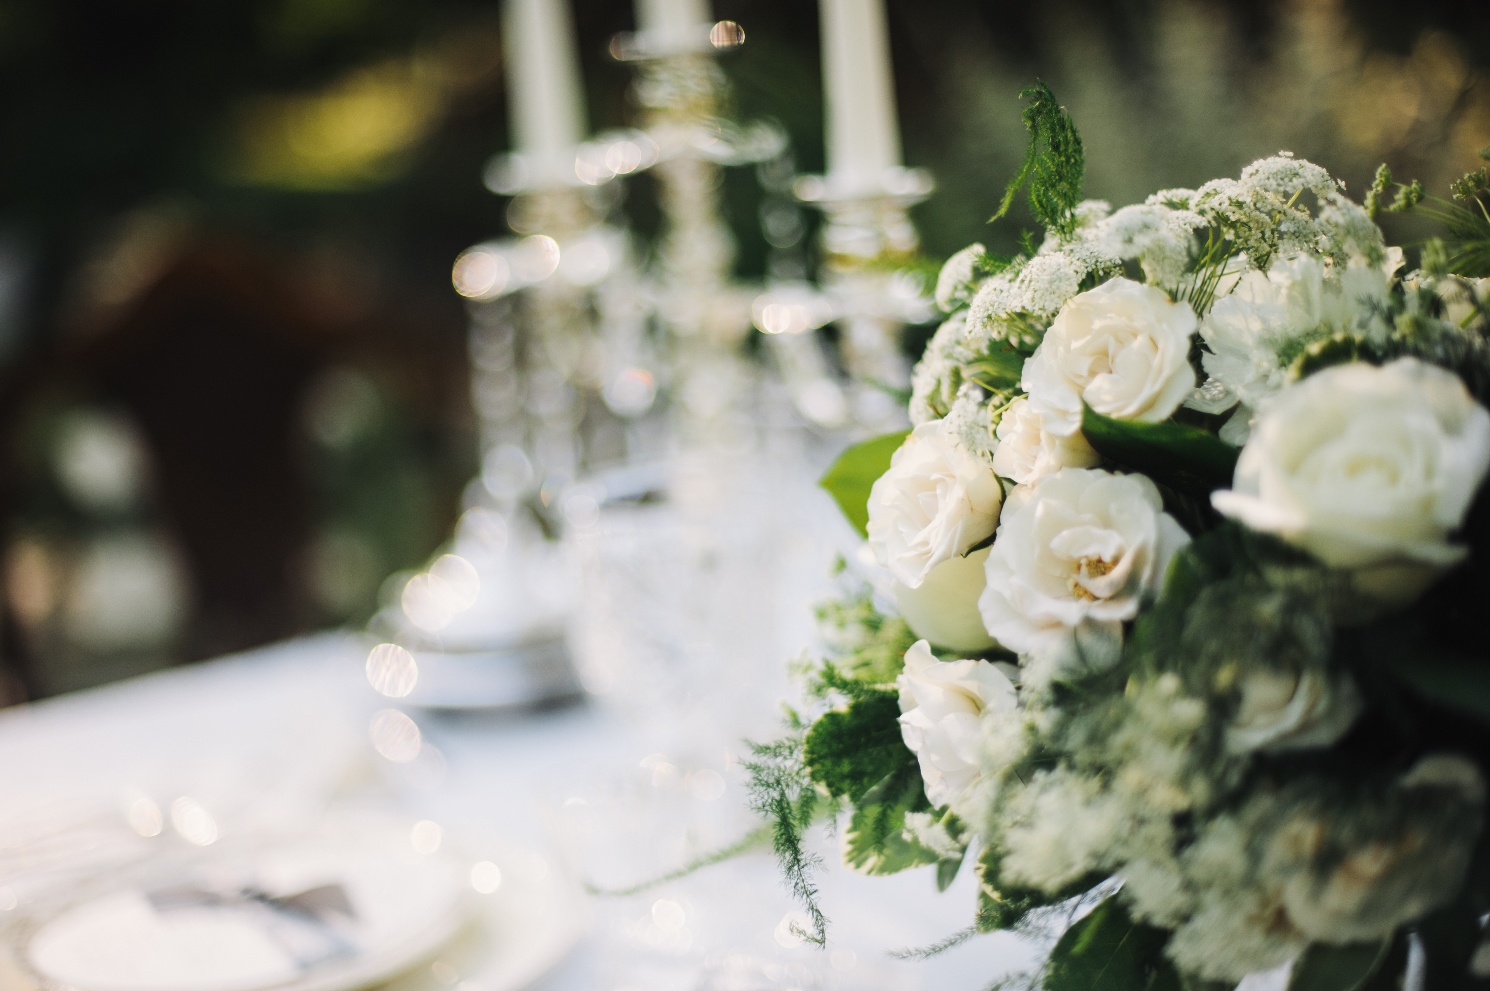 Downton Abbey Wedding Inspiration from Kimberly Brooke Photography